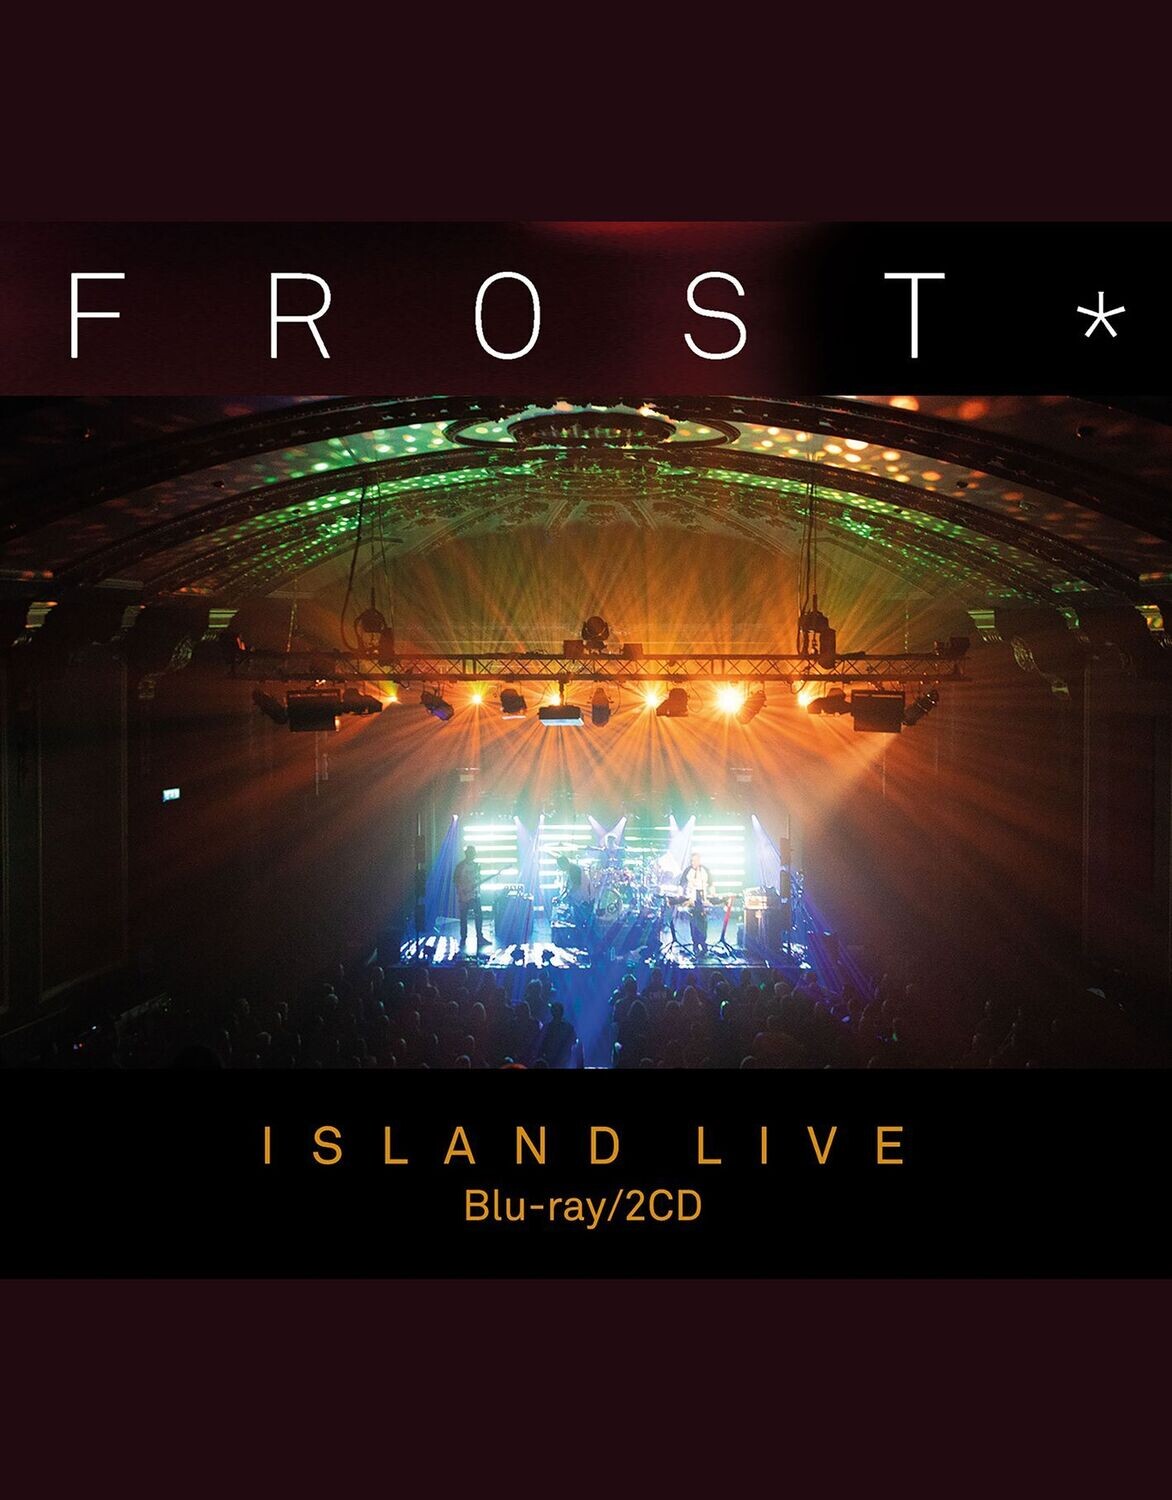 Frost* 'Island Live' Blu-ray/2CD